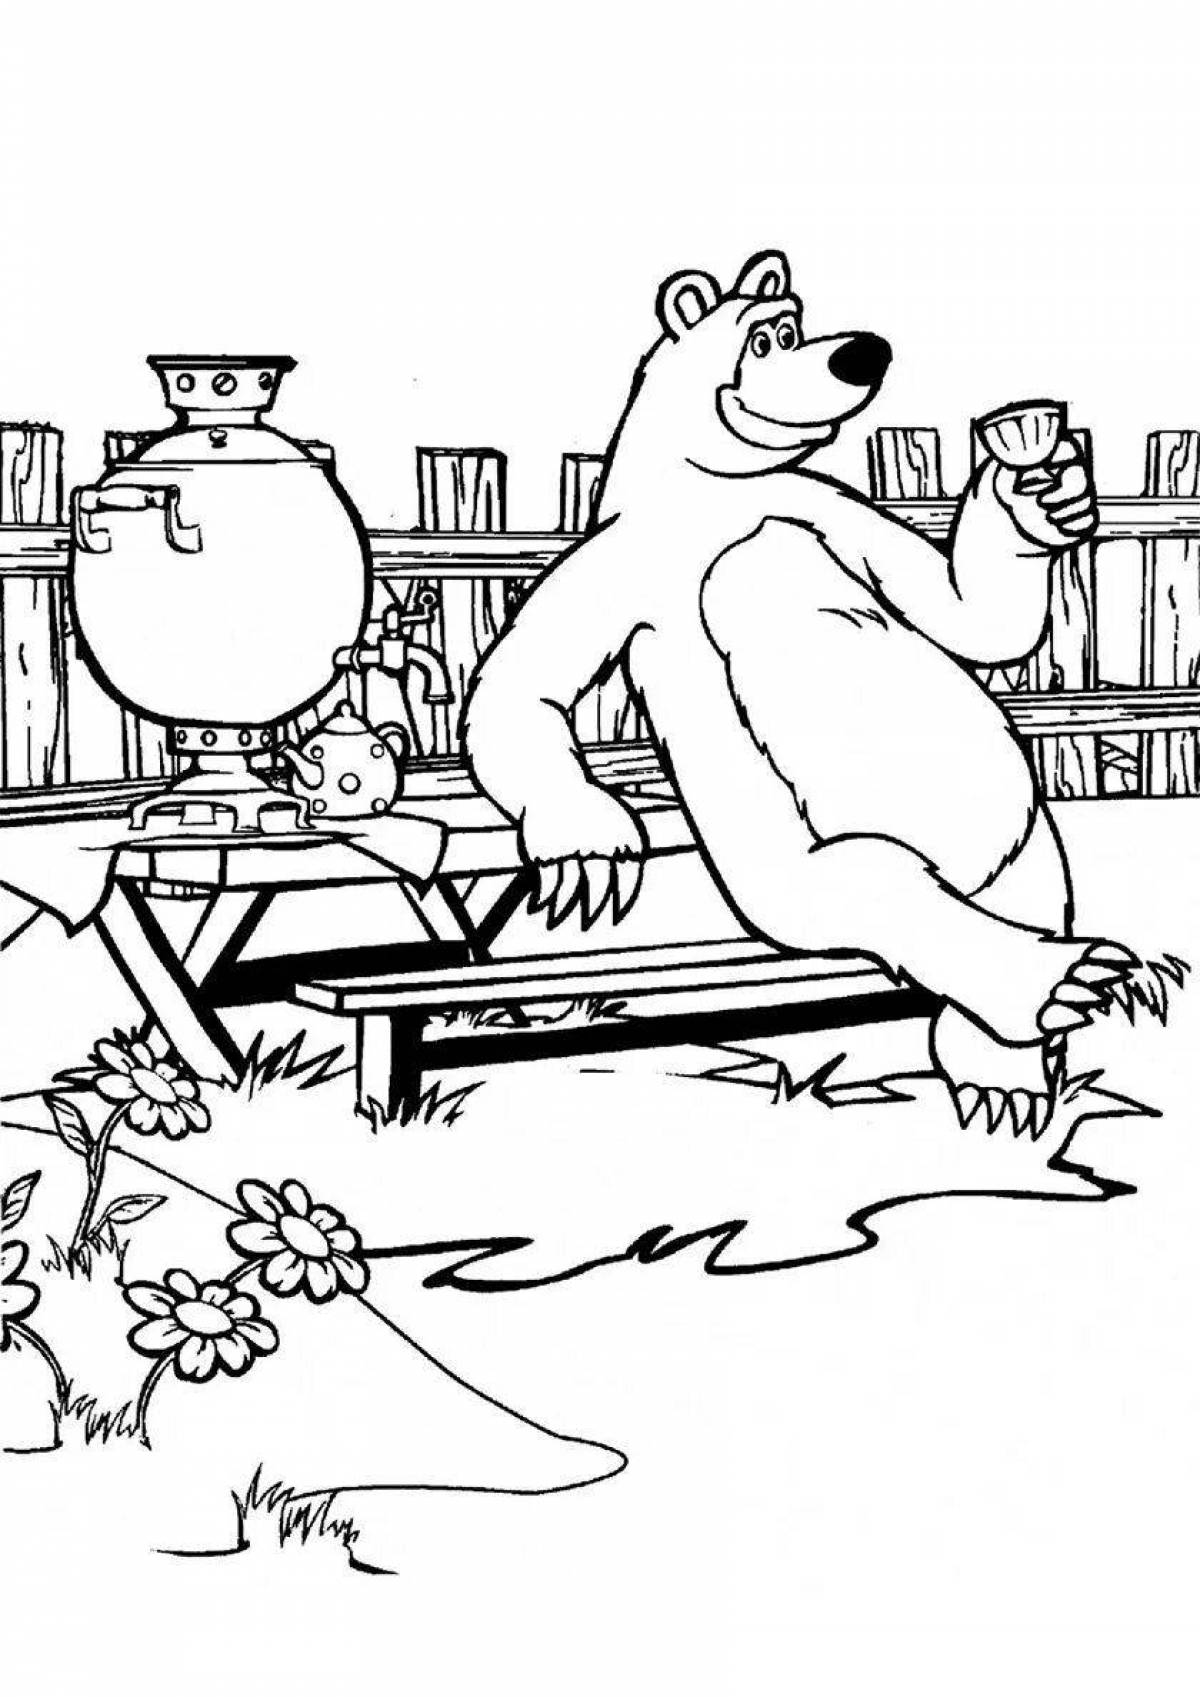 Masha and the bear coloring book